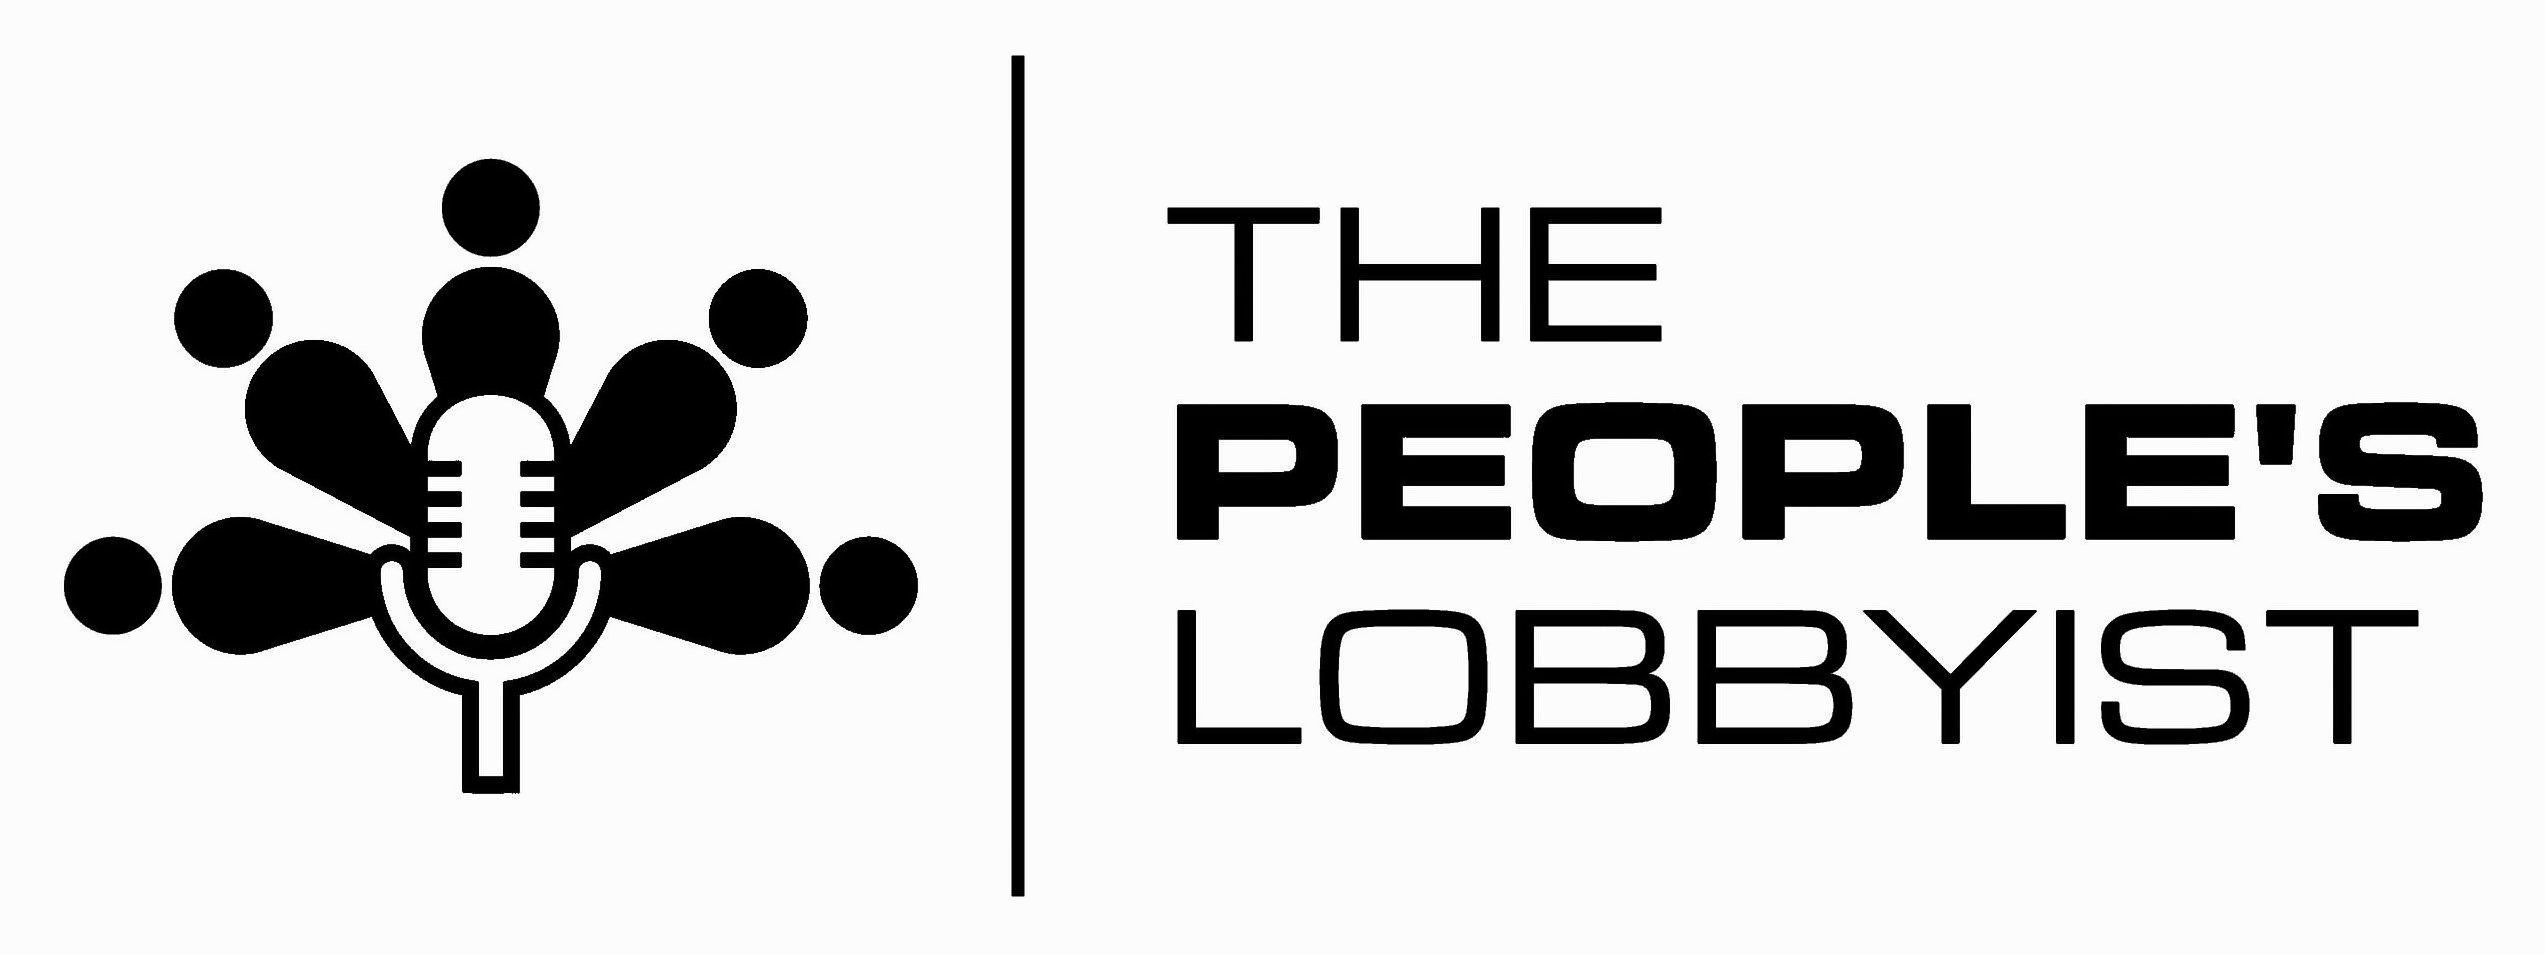 THE PEOPLE'S LOBBYIST